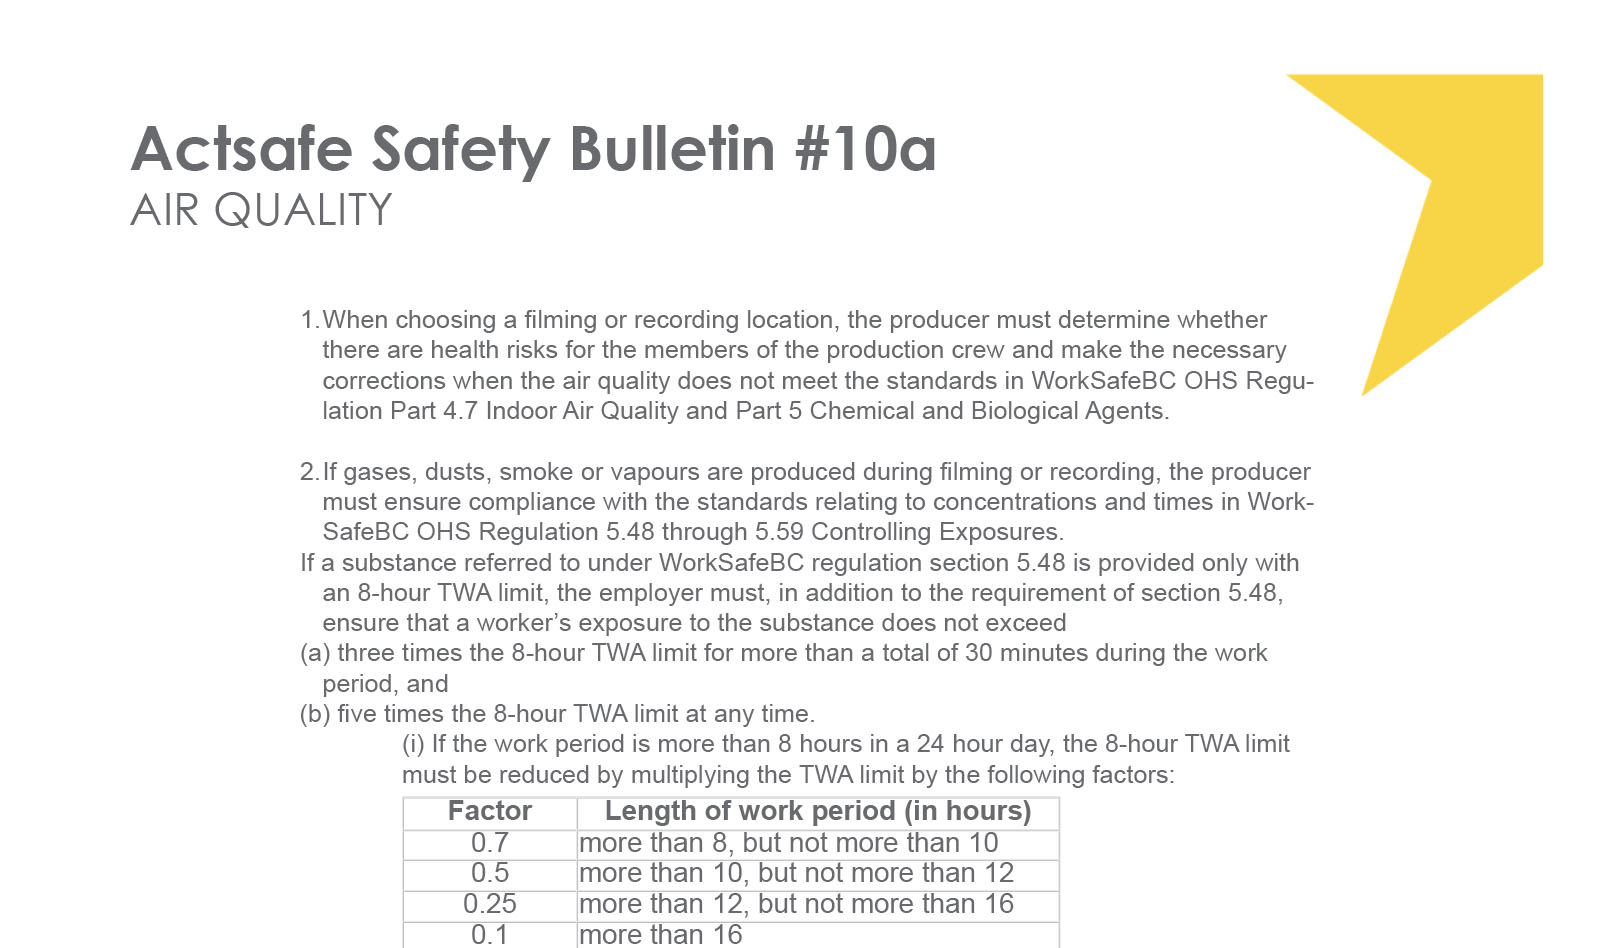 Air Quality: Safety Bulletin #10a